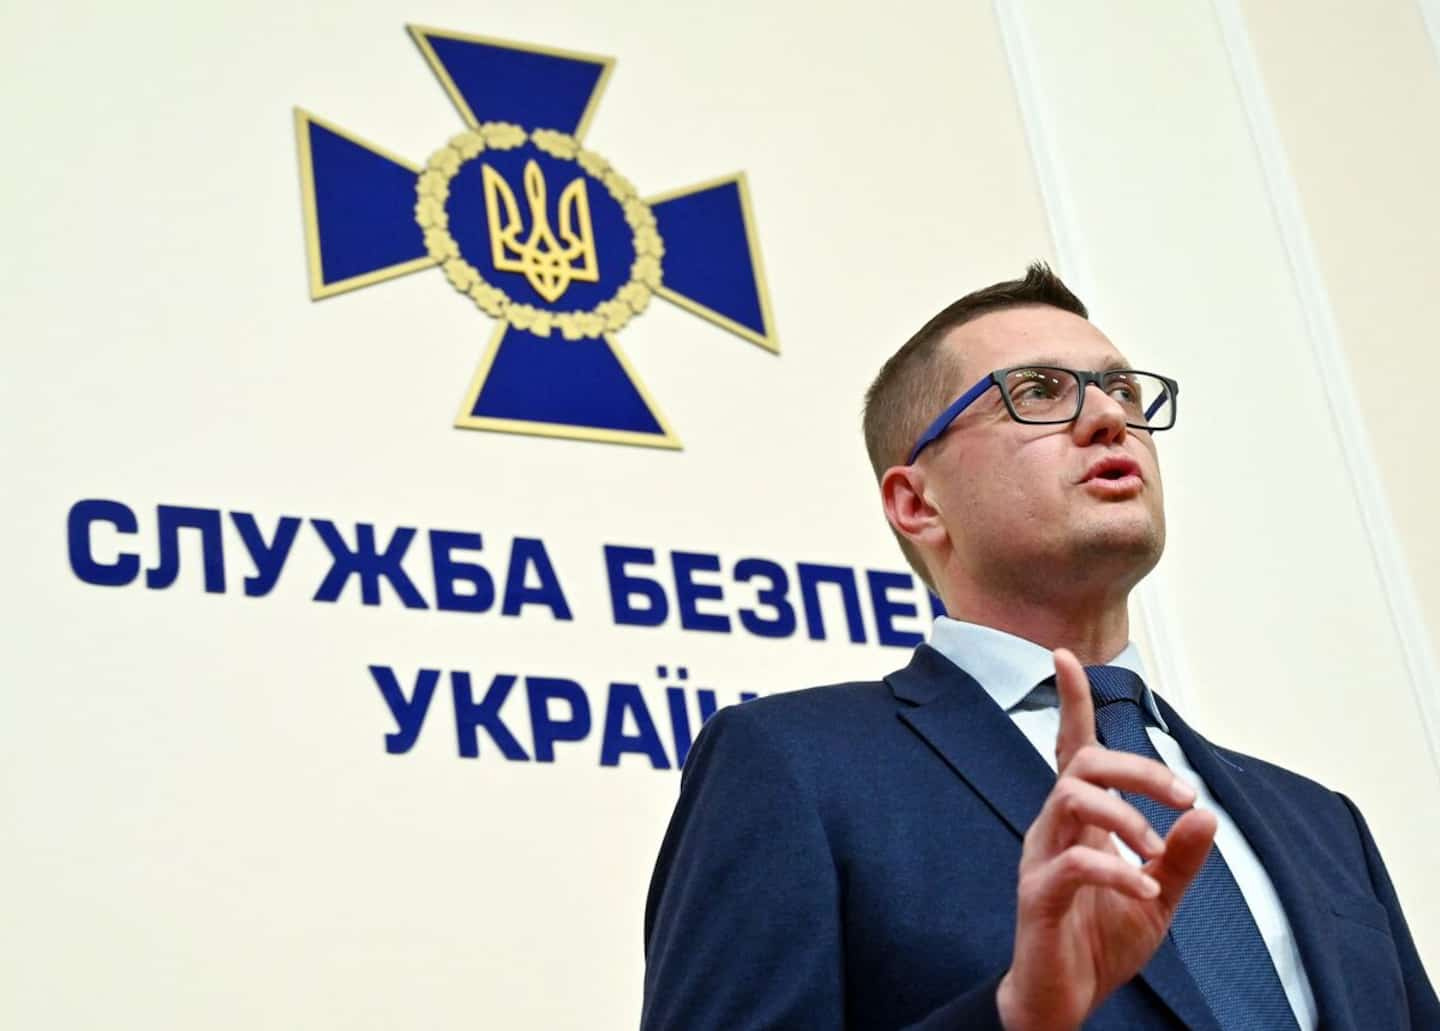 Russian spies in Ukraine and loss of key region: Zelensky turns heads